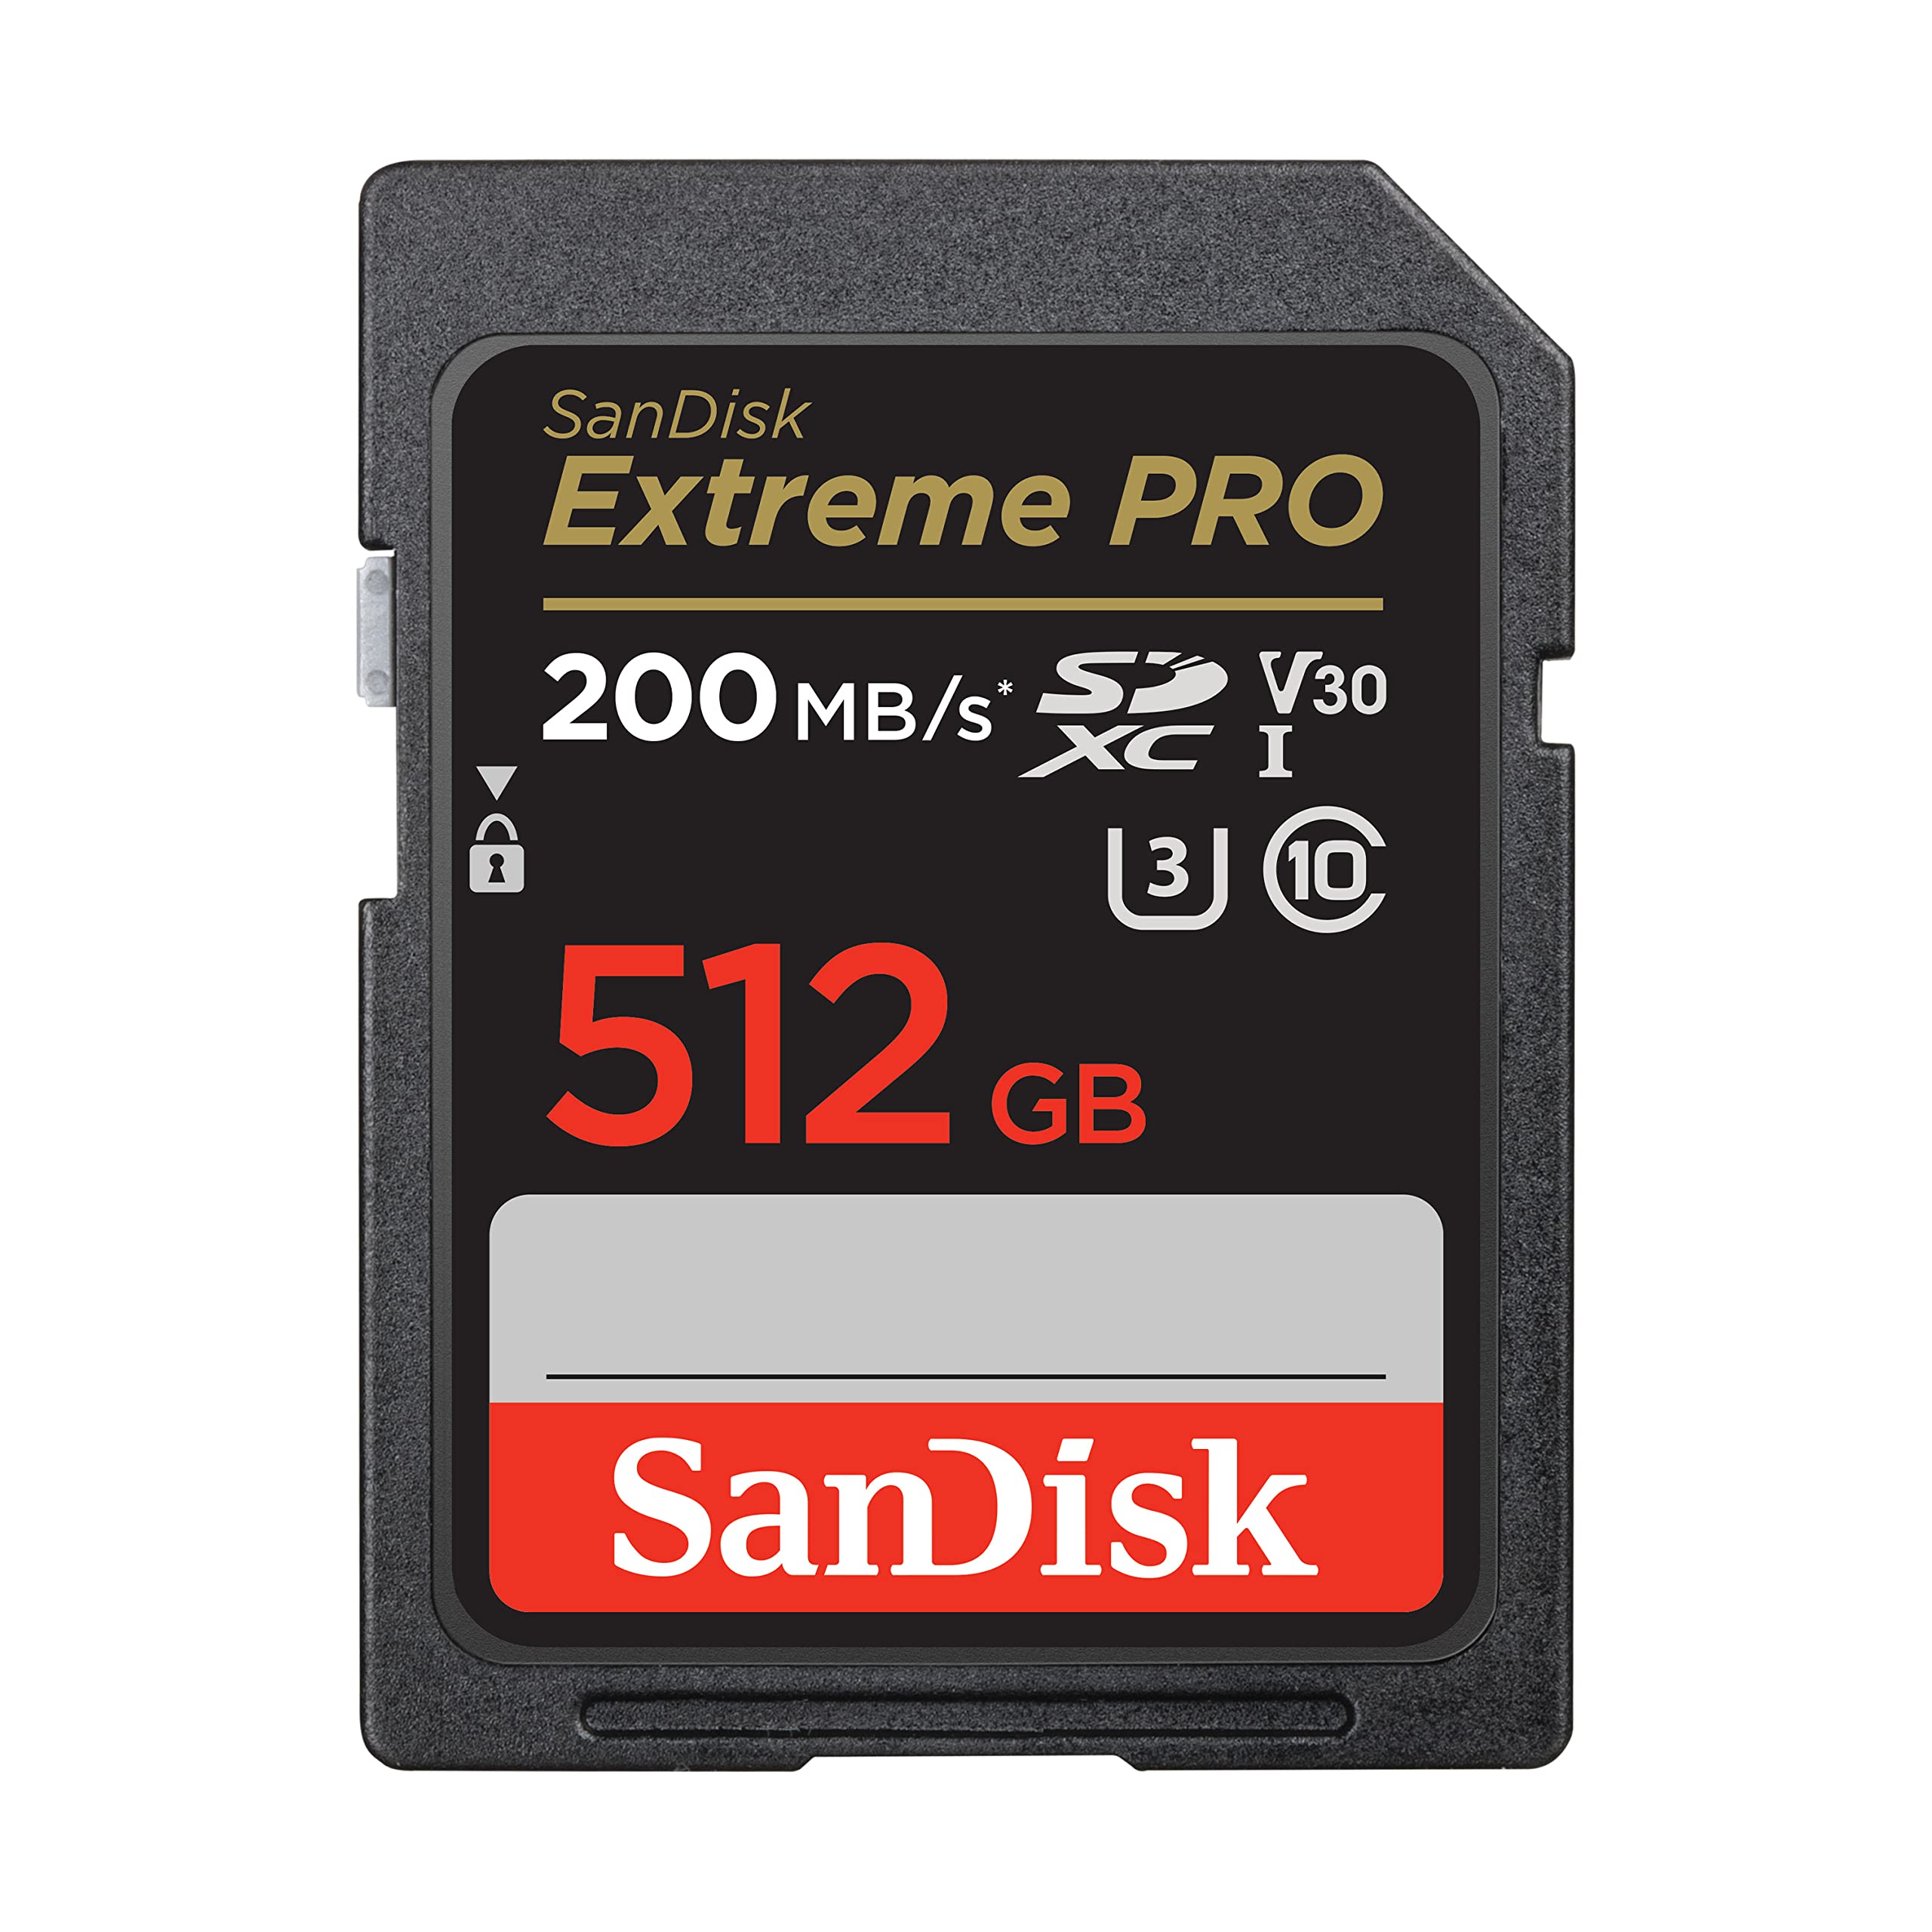 EXTREME PRO 512GB SDXC MEMORY